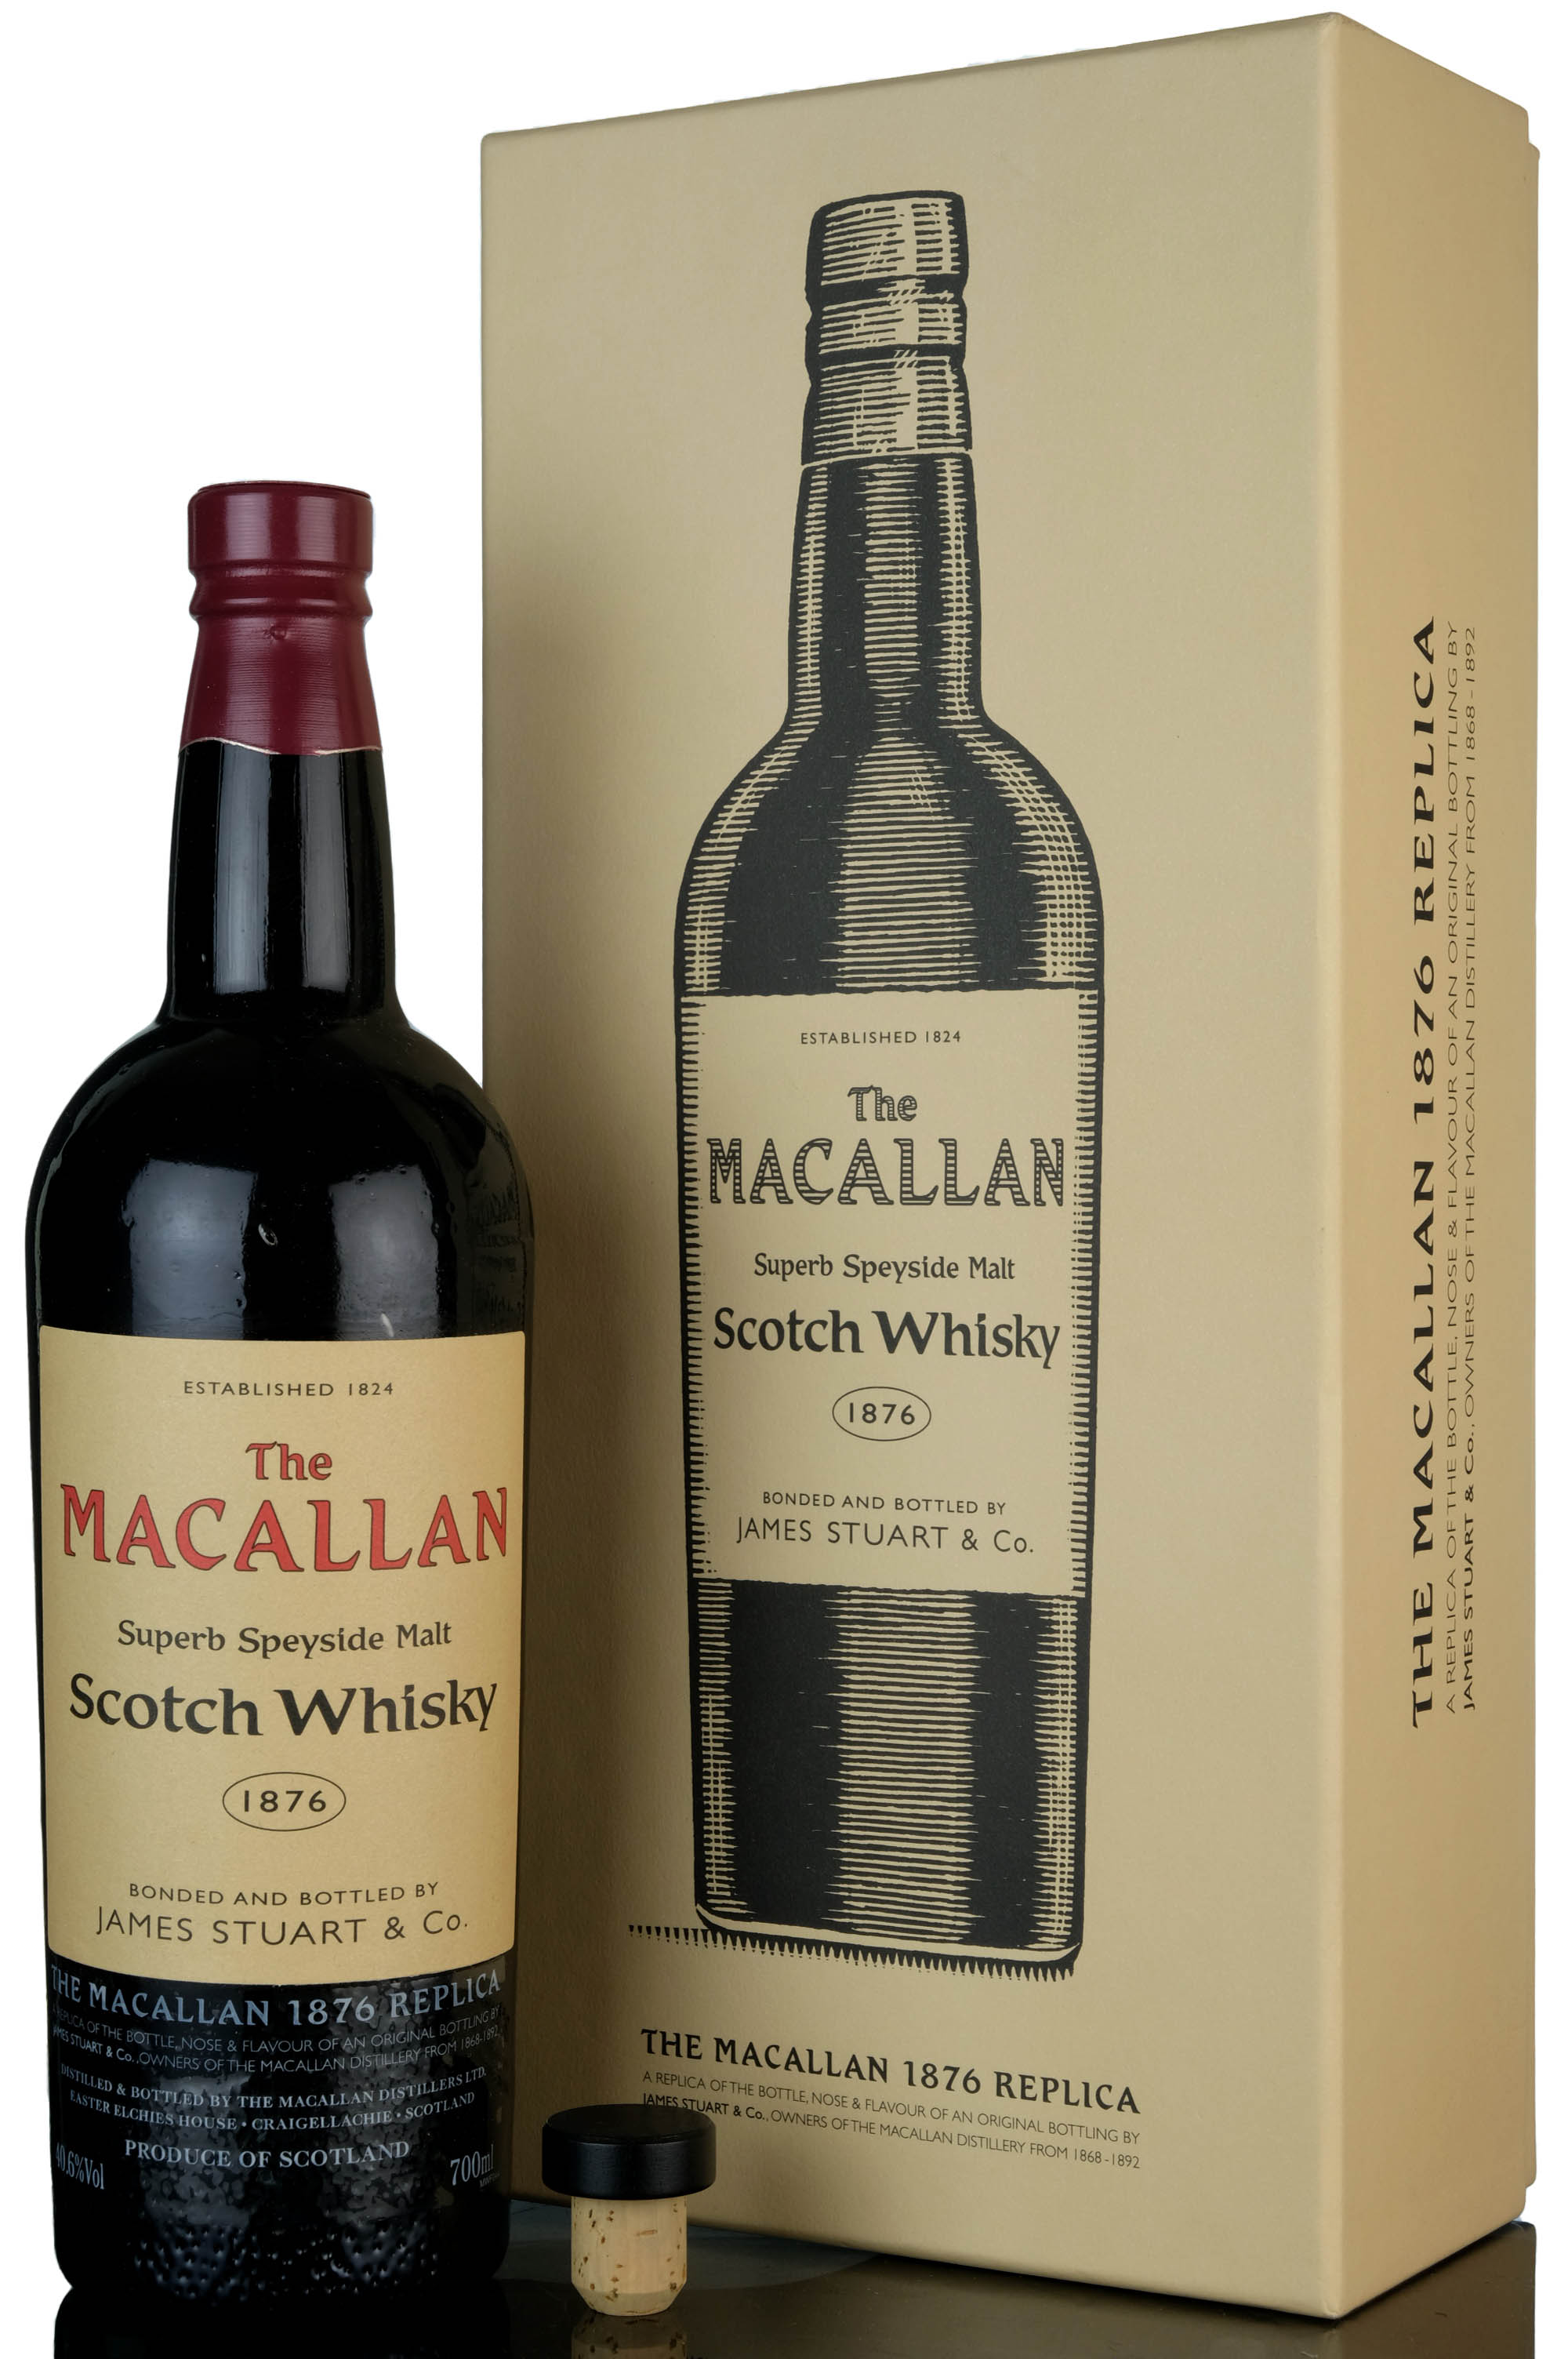 Macallan 1876 Replica - 2003 Release